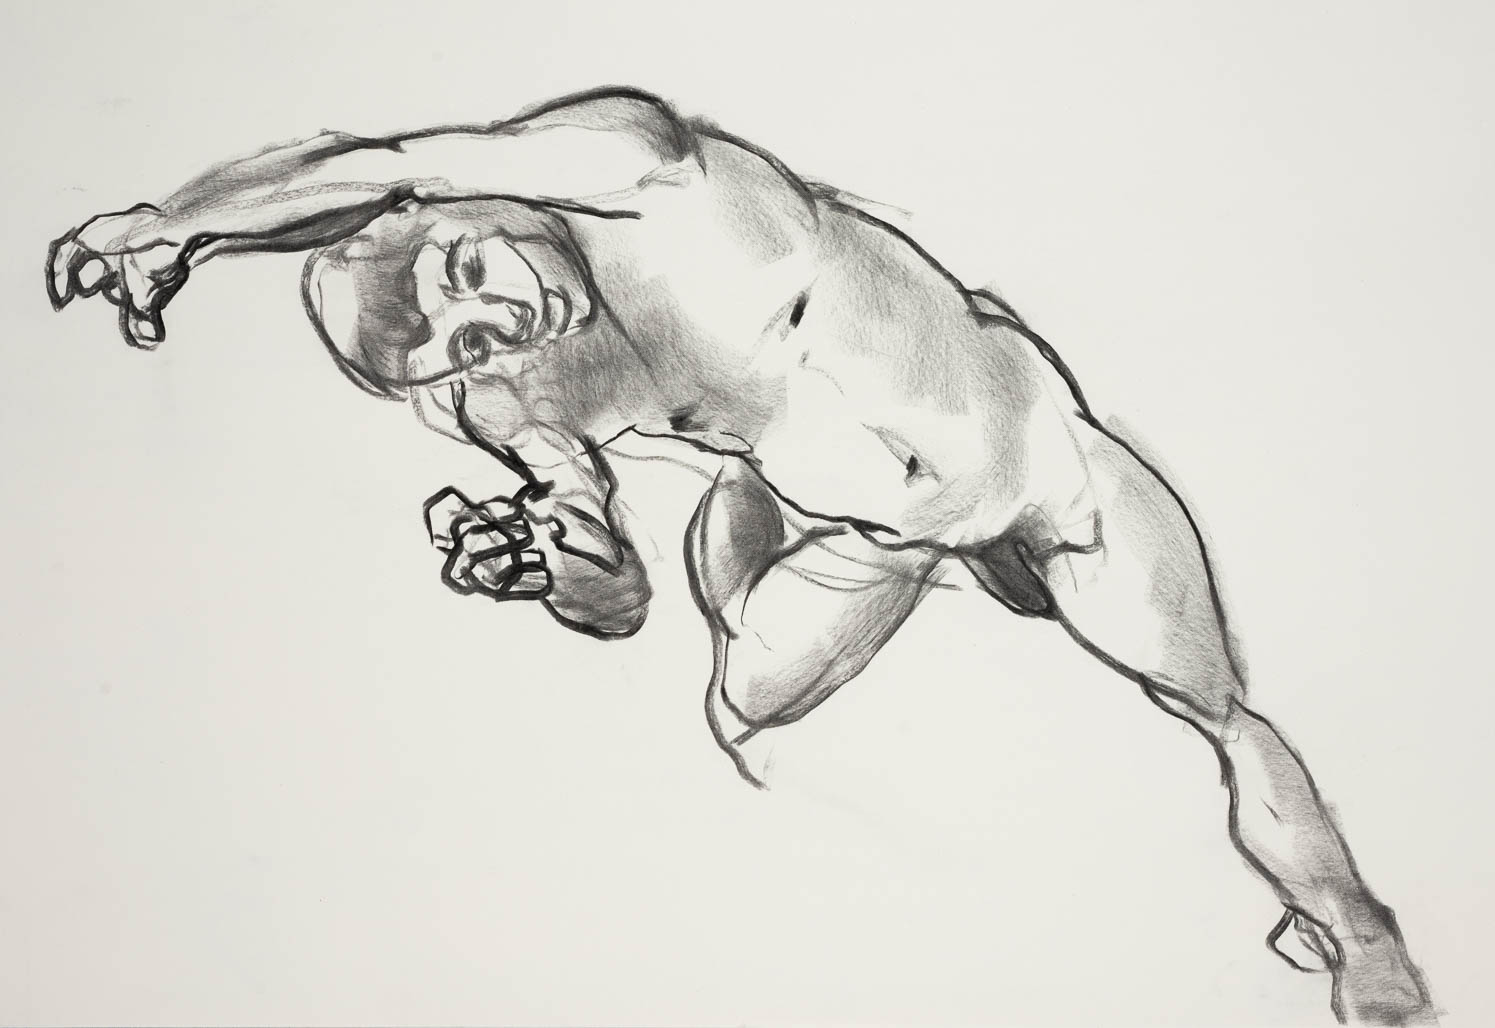 Sketch of Tiago, improvising dynamic poses